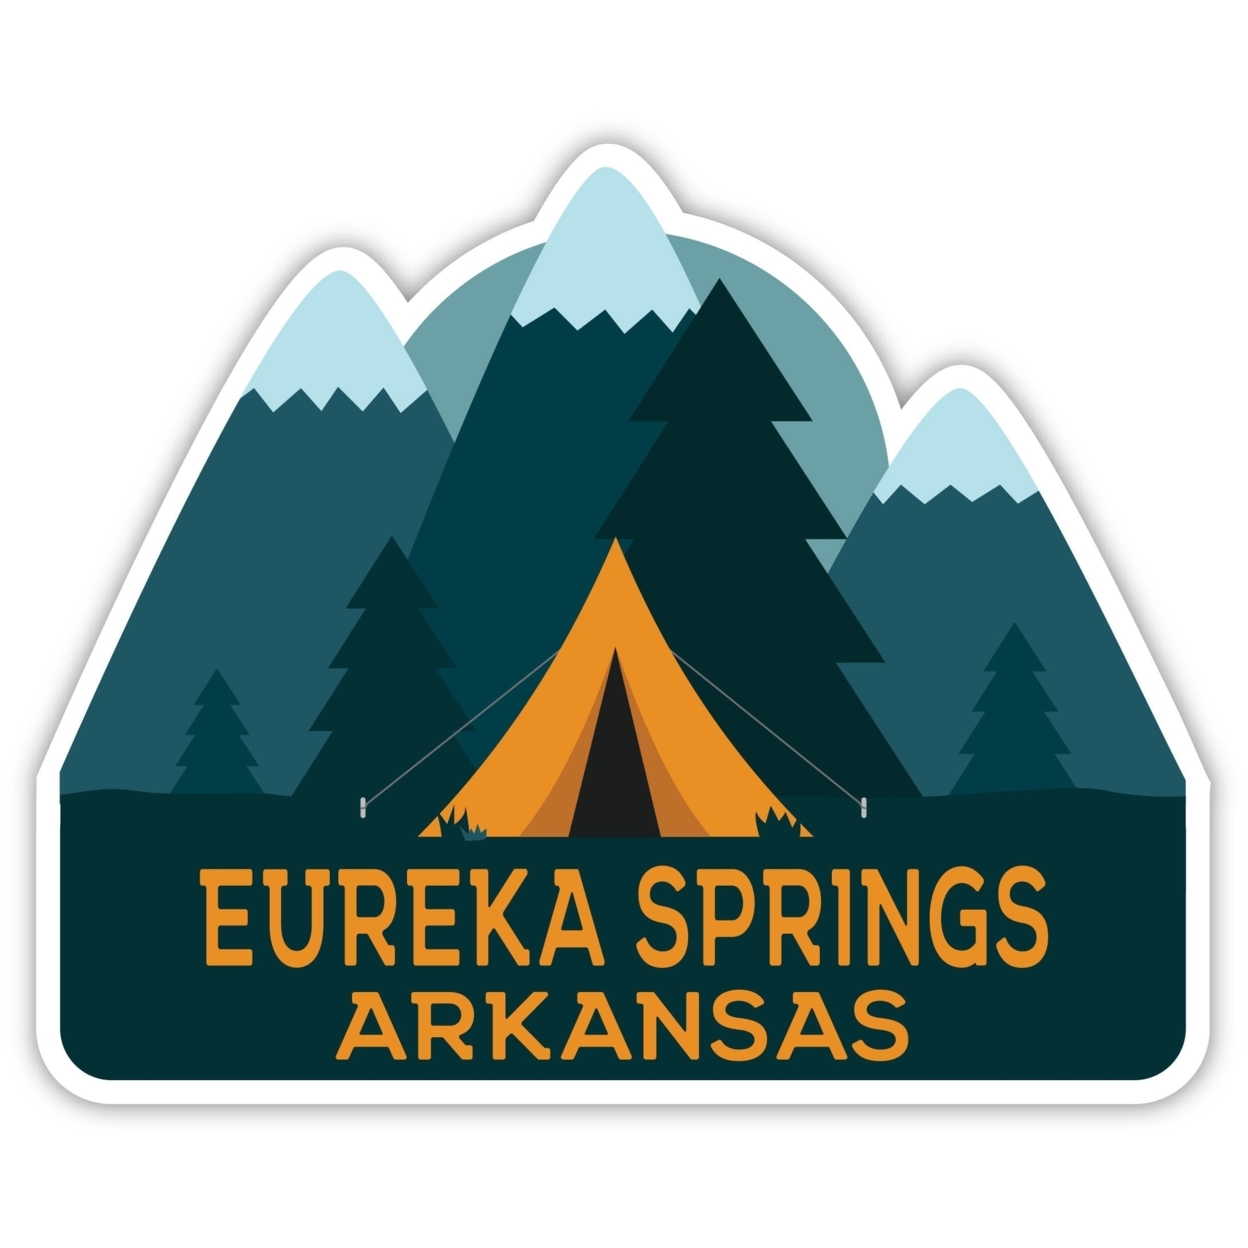 Eureka Springs Arkansas Souvenir Decorative Stickers (Choose Theme And Size) - Single Unit, 10-Inch, Adventures Awaits